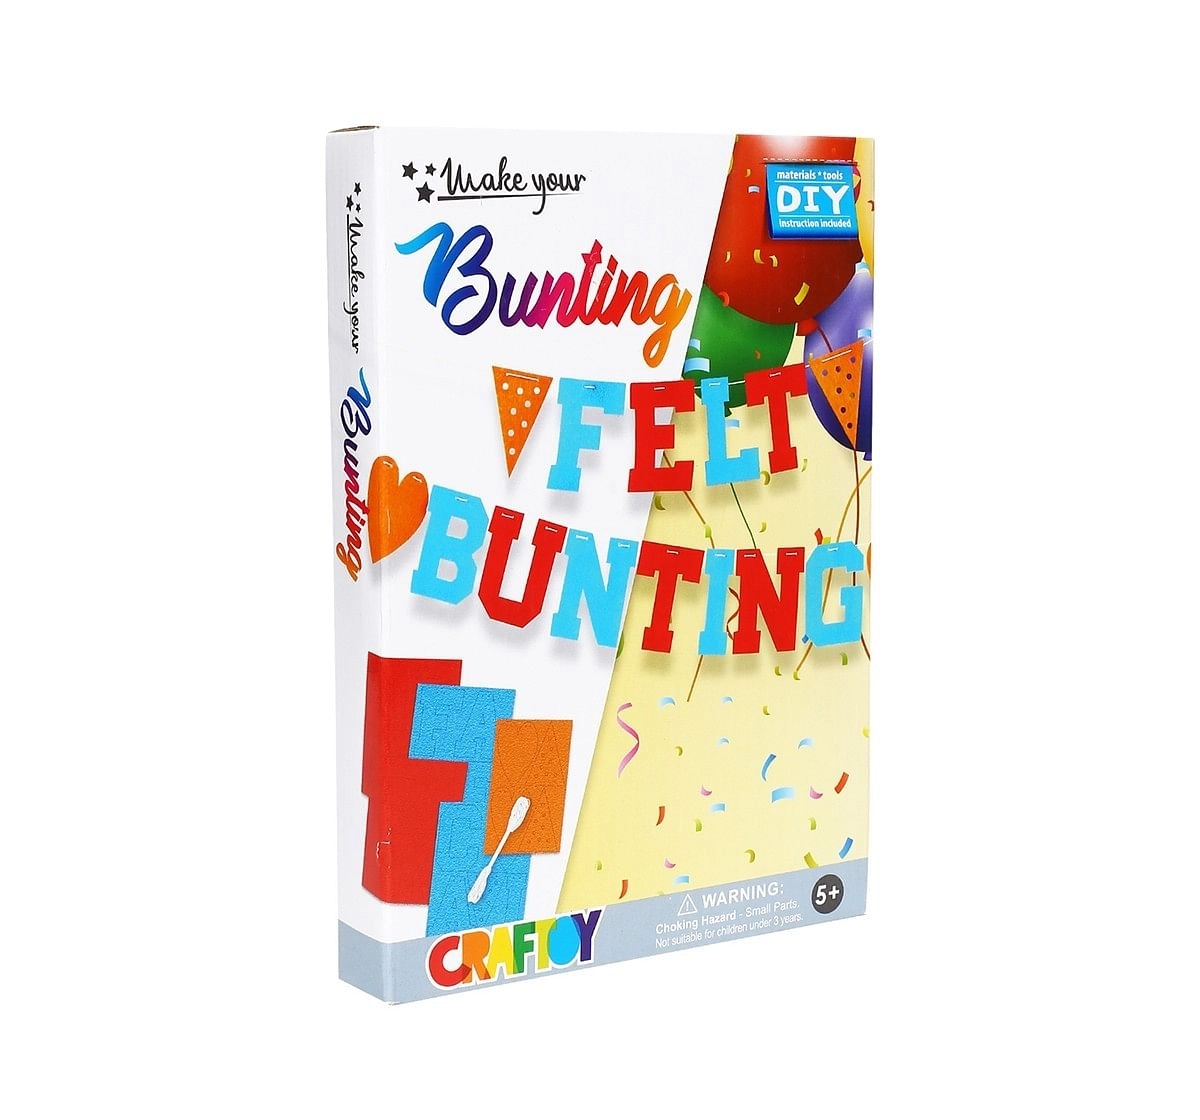 Redshift Comdaq Alphabet Bunting DIY Art & Craft Kit for Kids age 5Y+ (Blue)